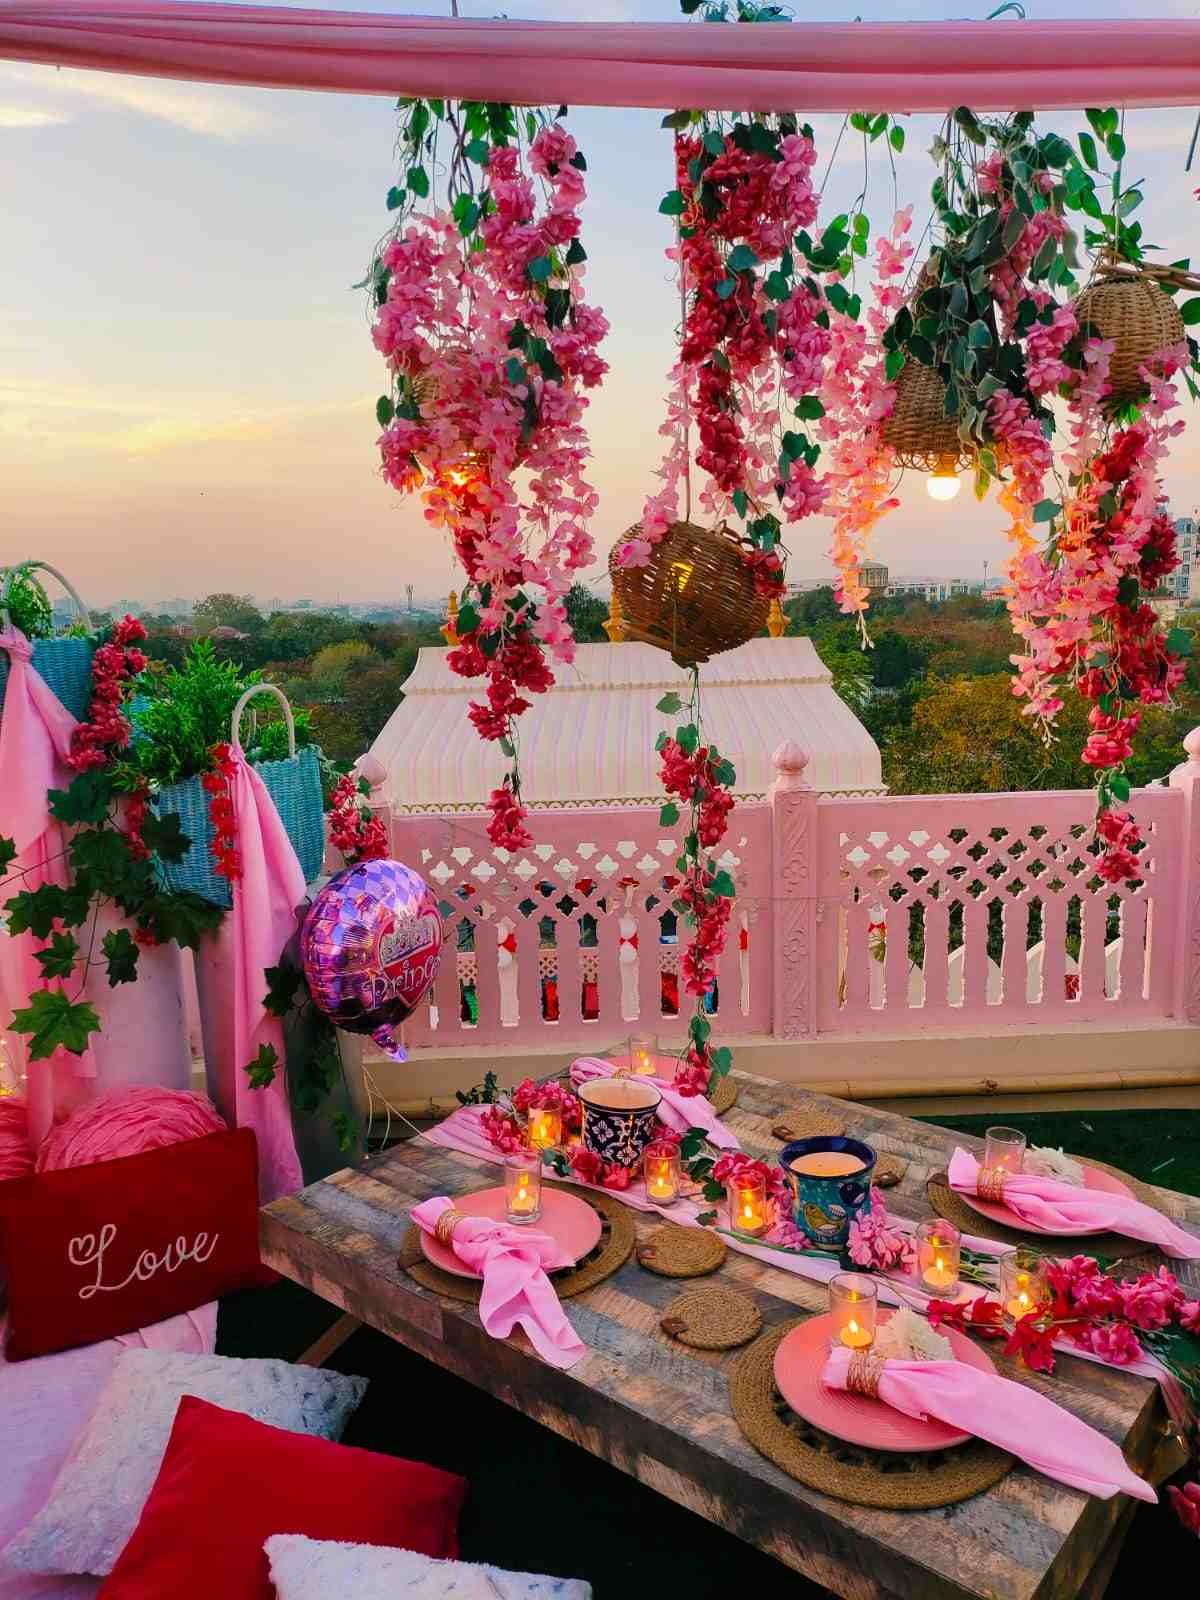 Romantic Breakfast Date in Jaipur